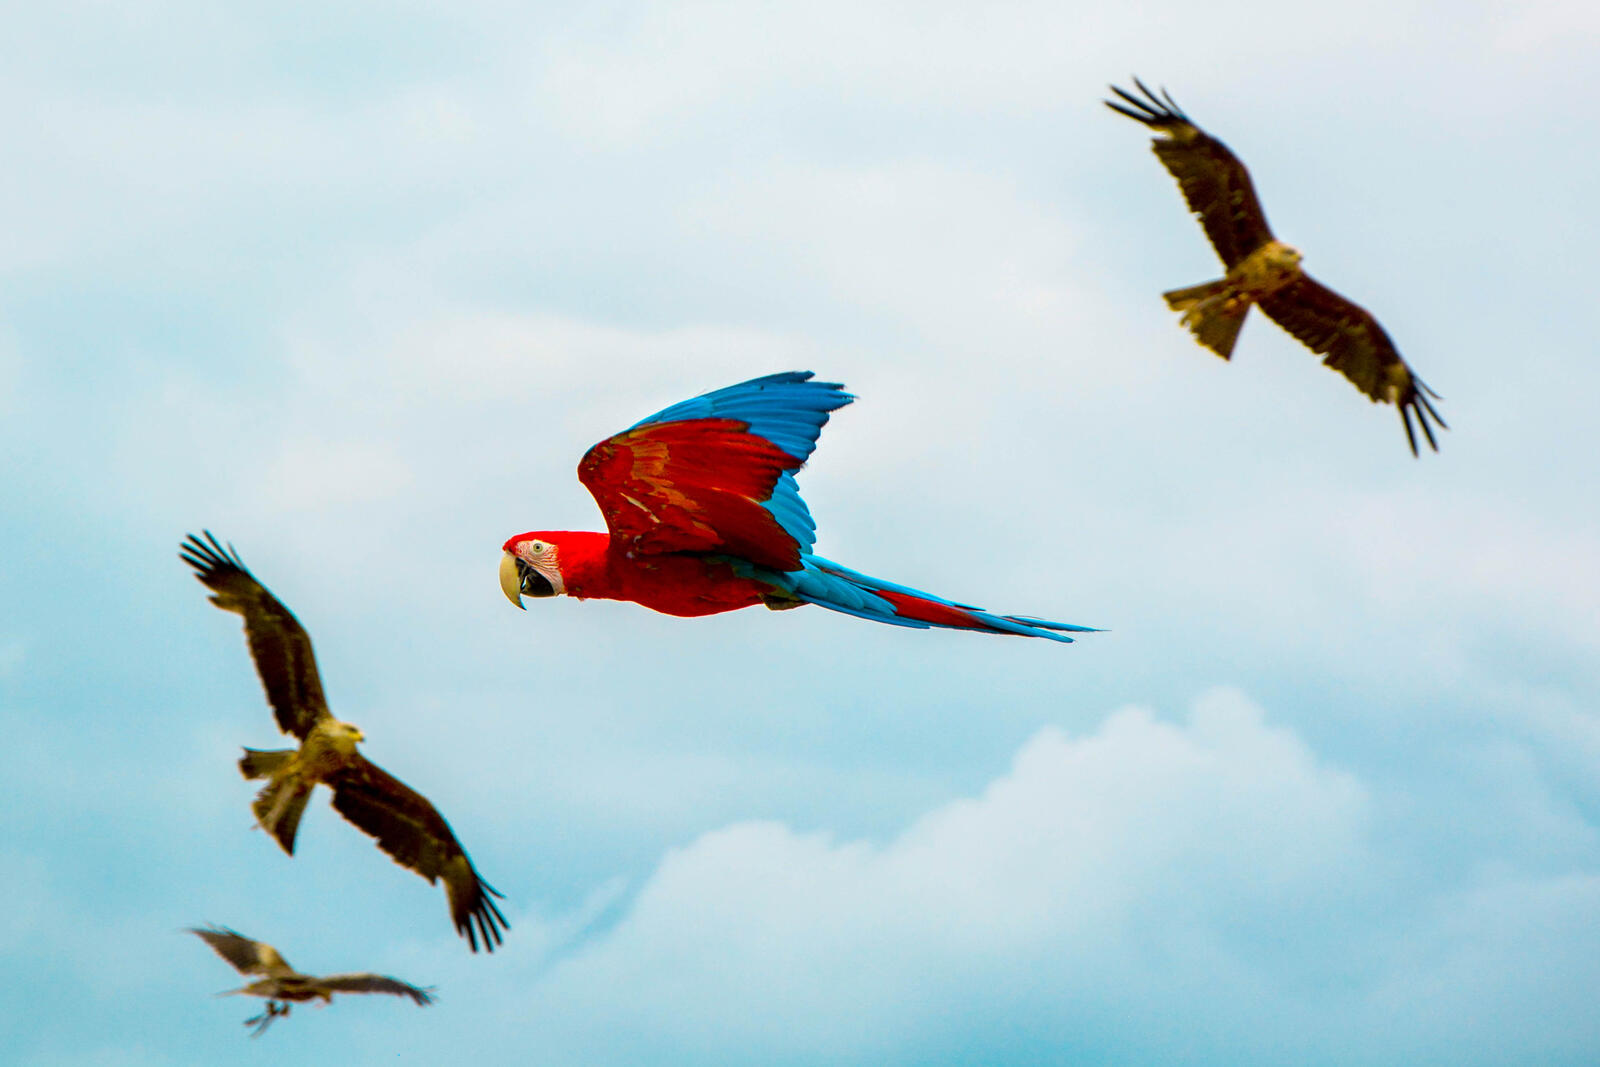 Wallpapers flight Macaw sky on the desktop